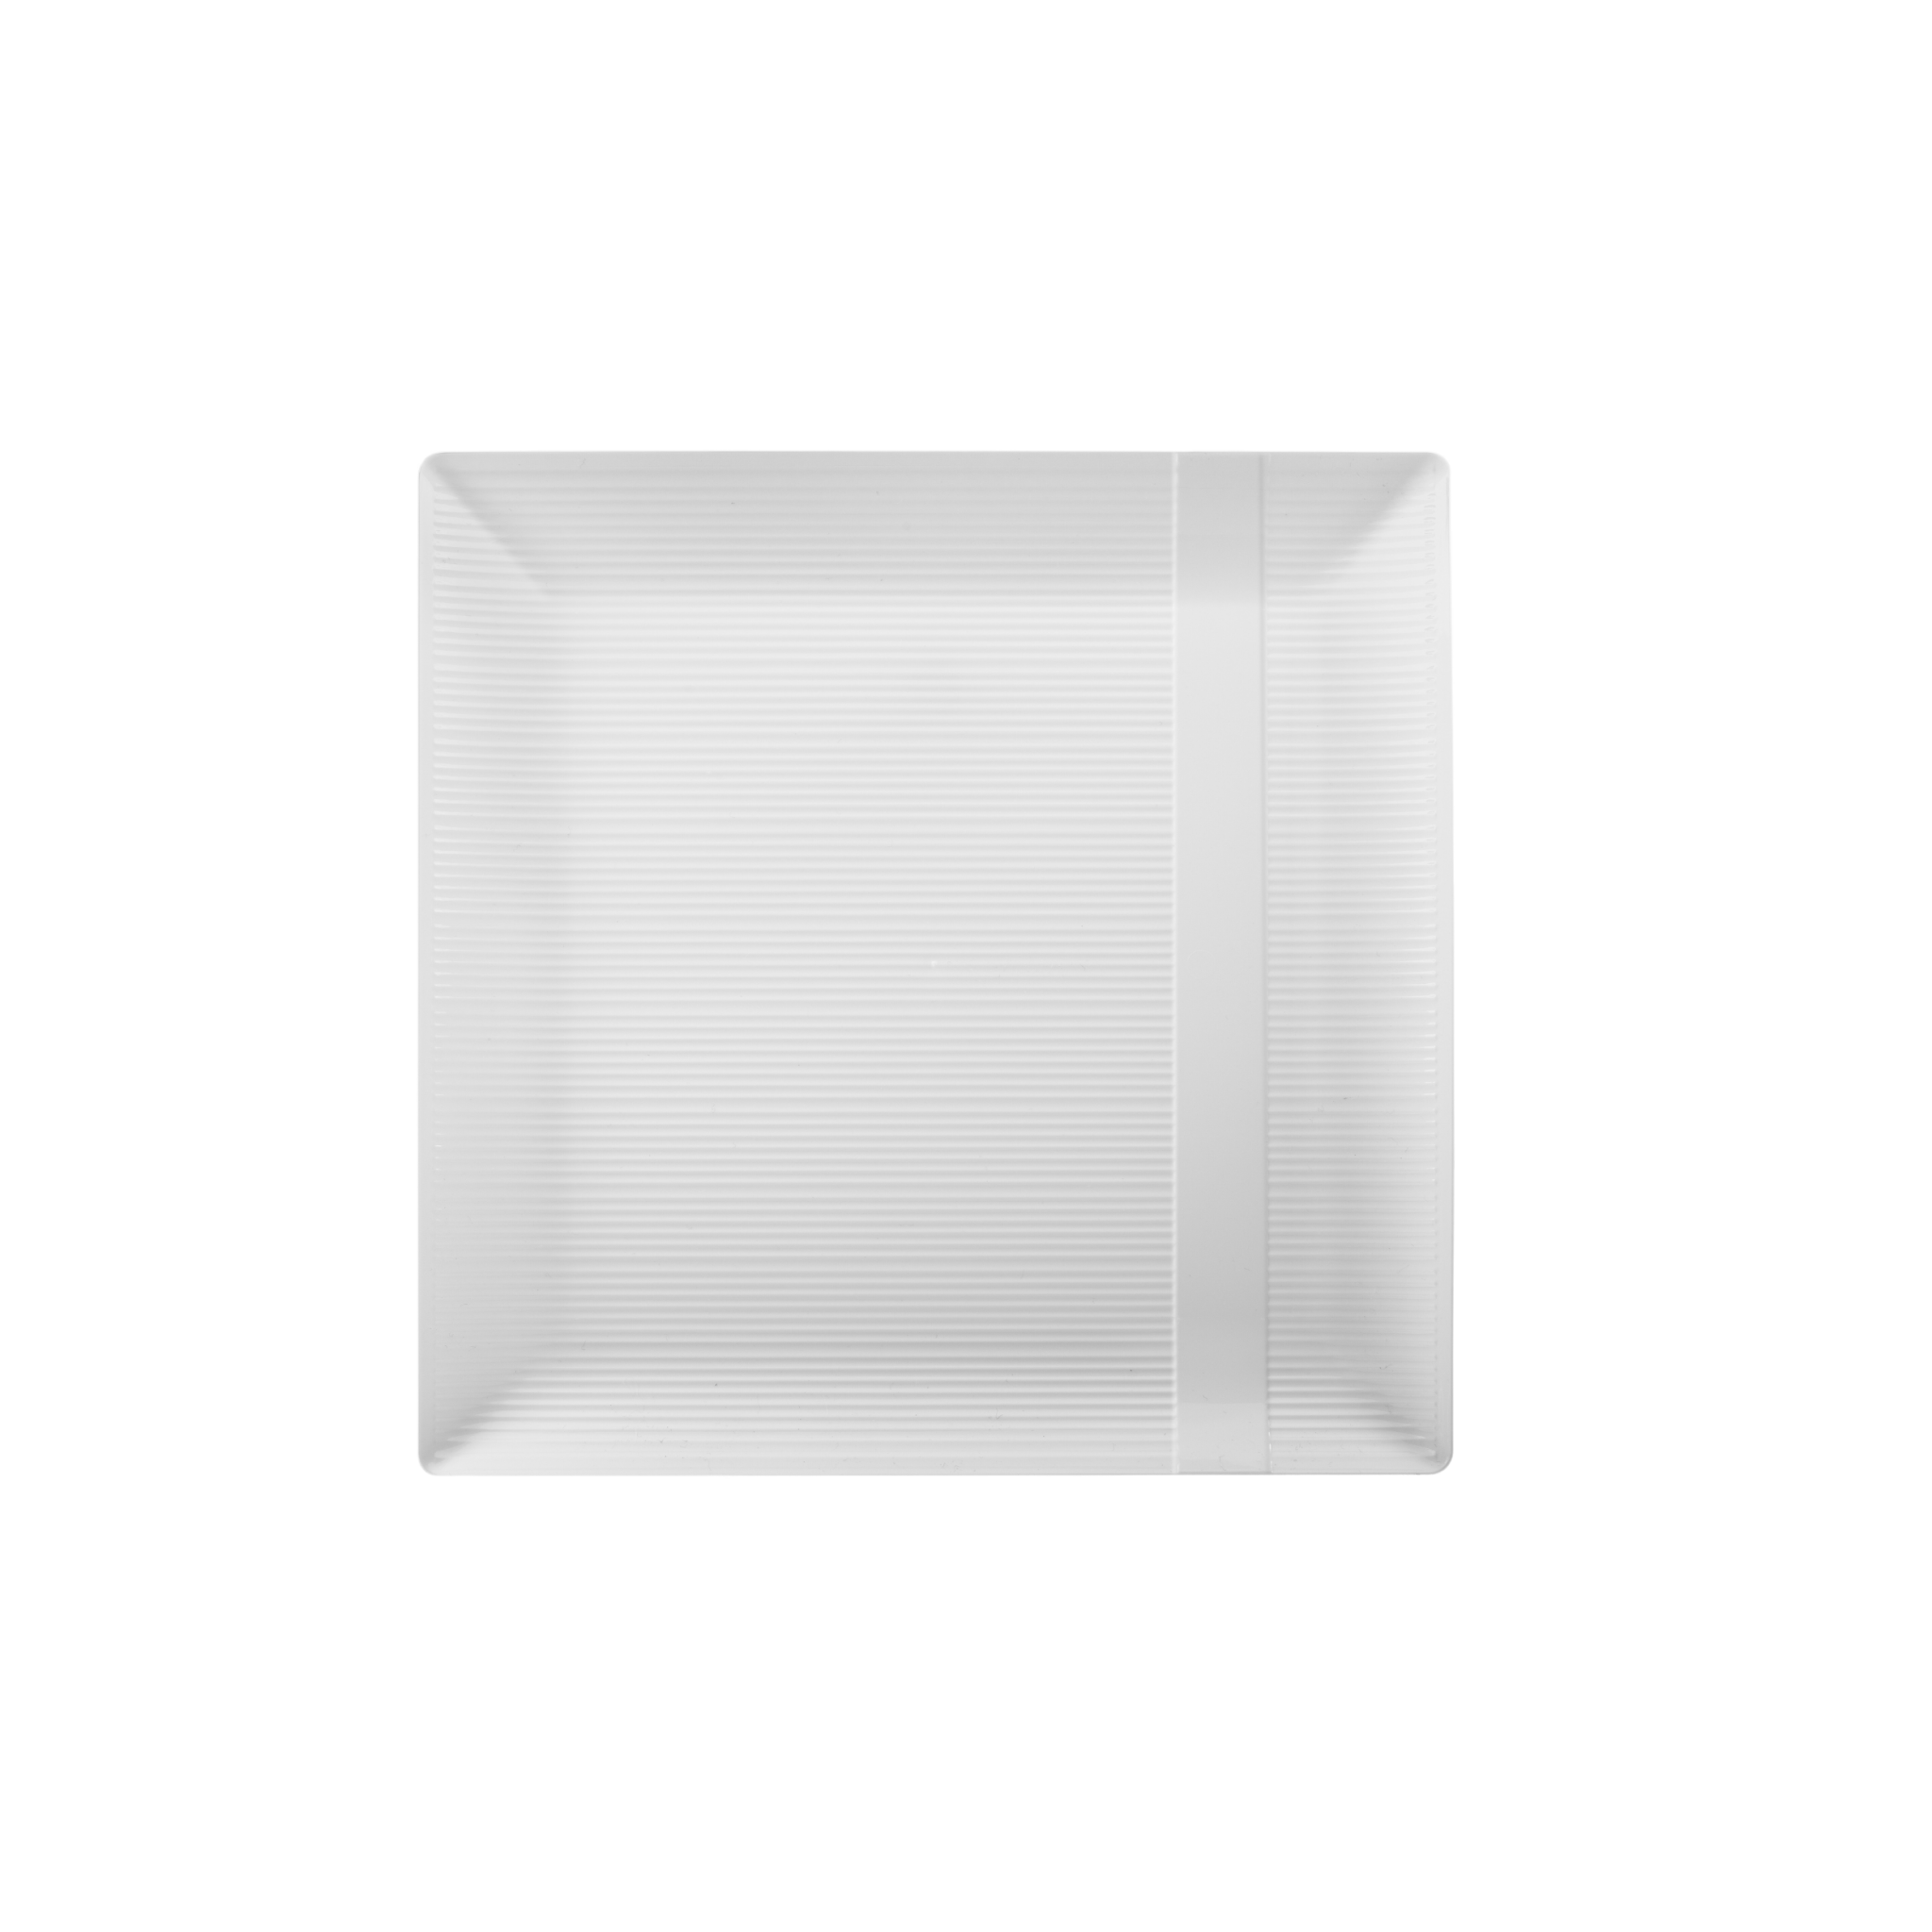 6.5" Zen Ridged White Square Plastic Plates (120 Count)